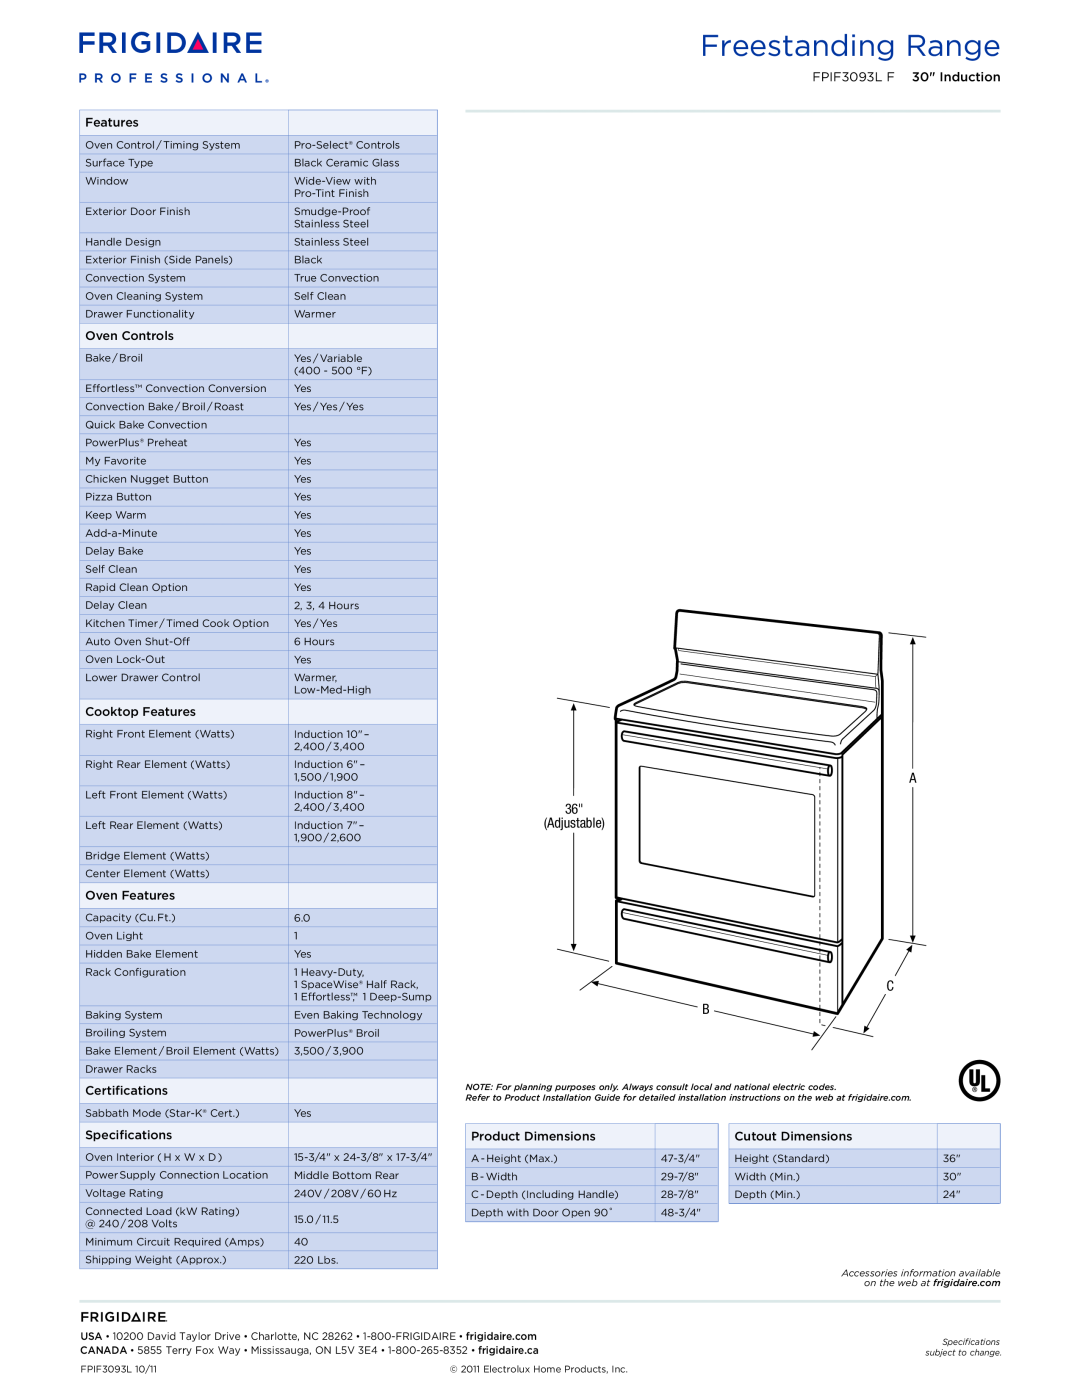 Frigidaire FPIF3093L F dimensions Freestanding Range, A 36 Adjustable C B 